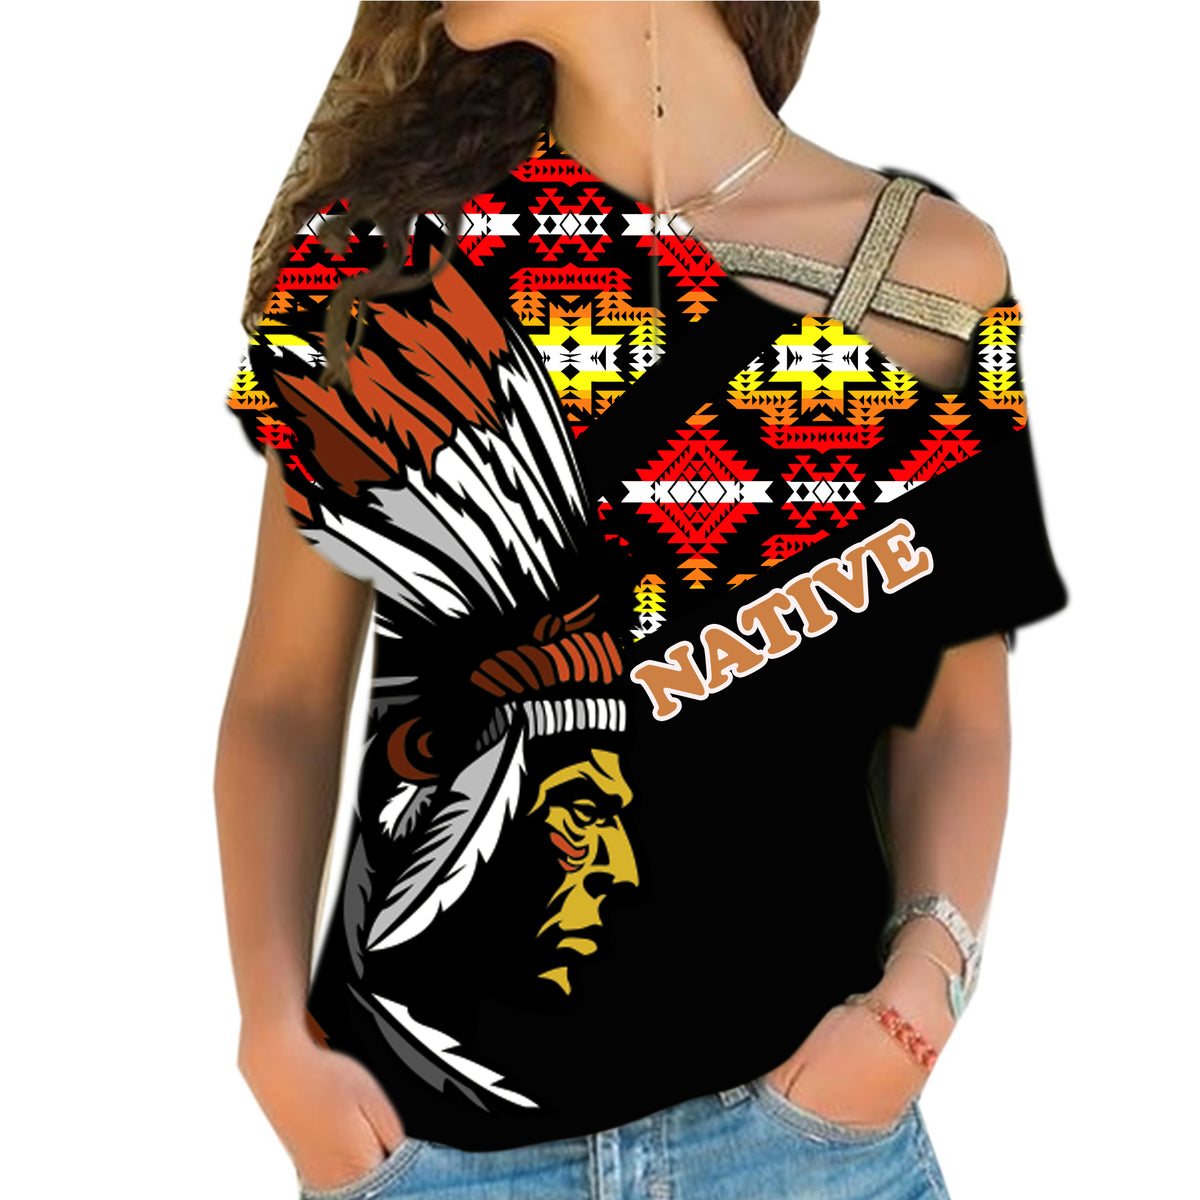 Powwow StoreCRS0001216 Native American Cross Shoulder Shirt